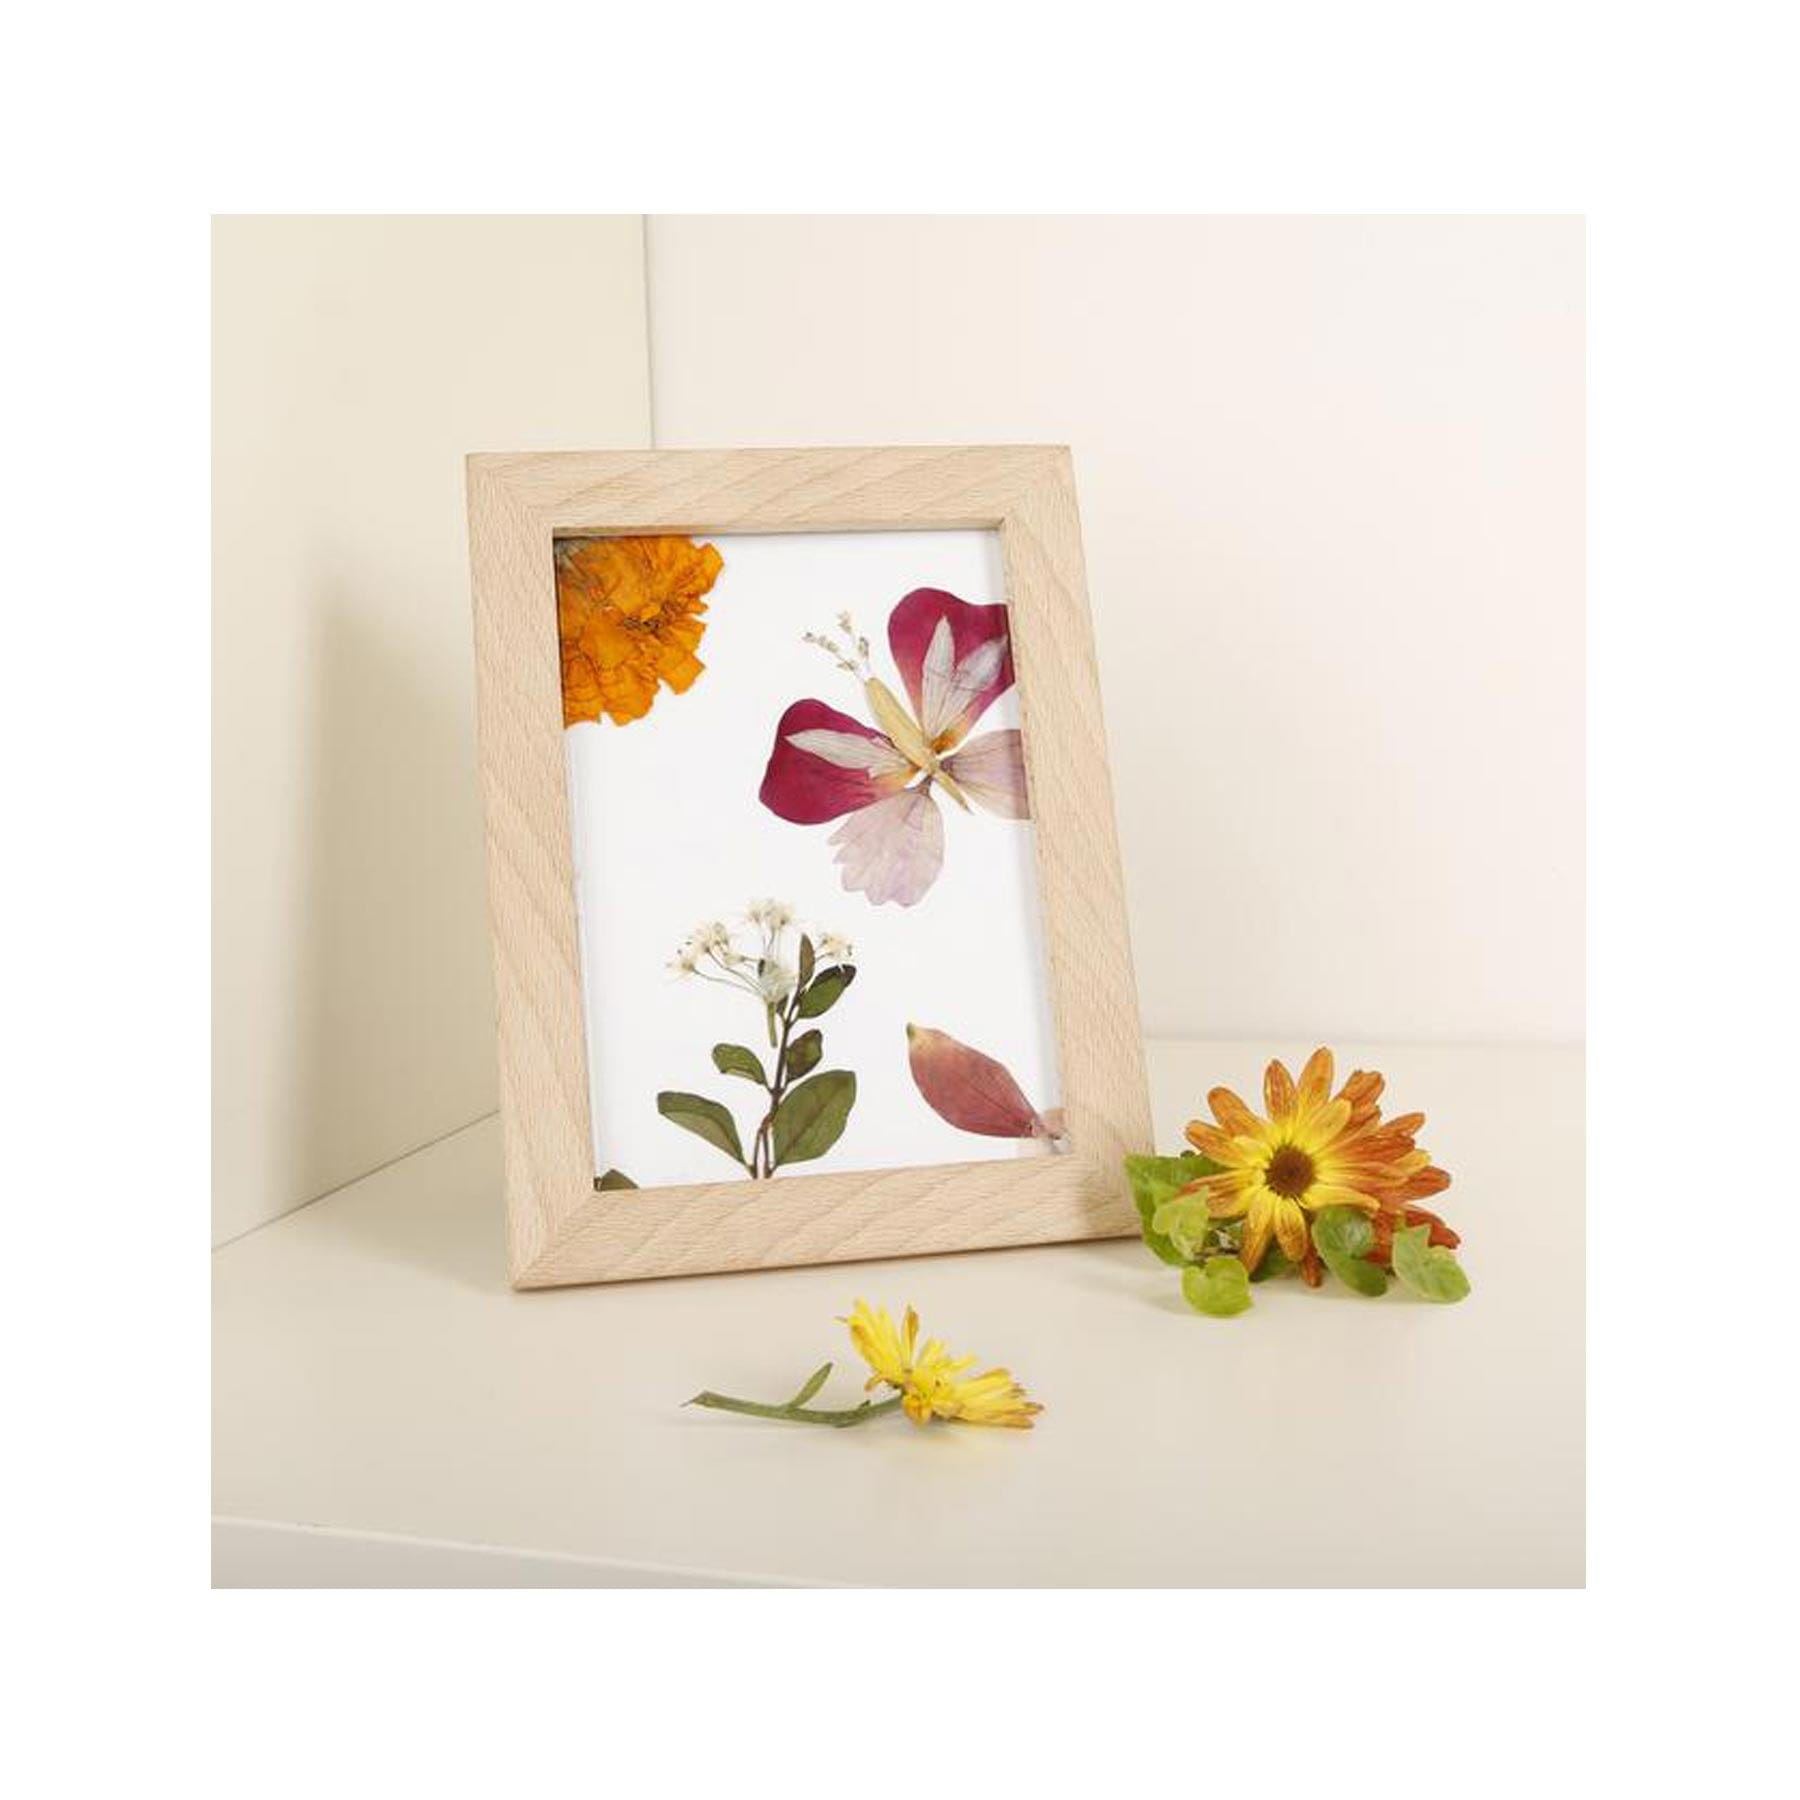 Huckleberry pressed flower frame art